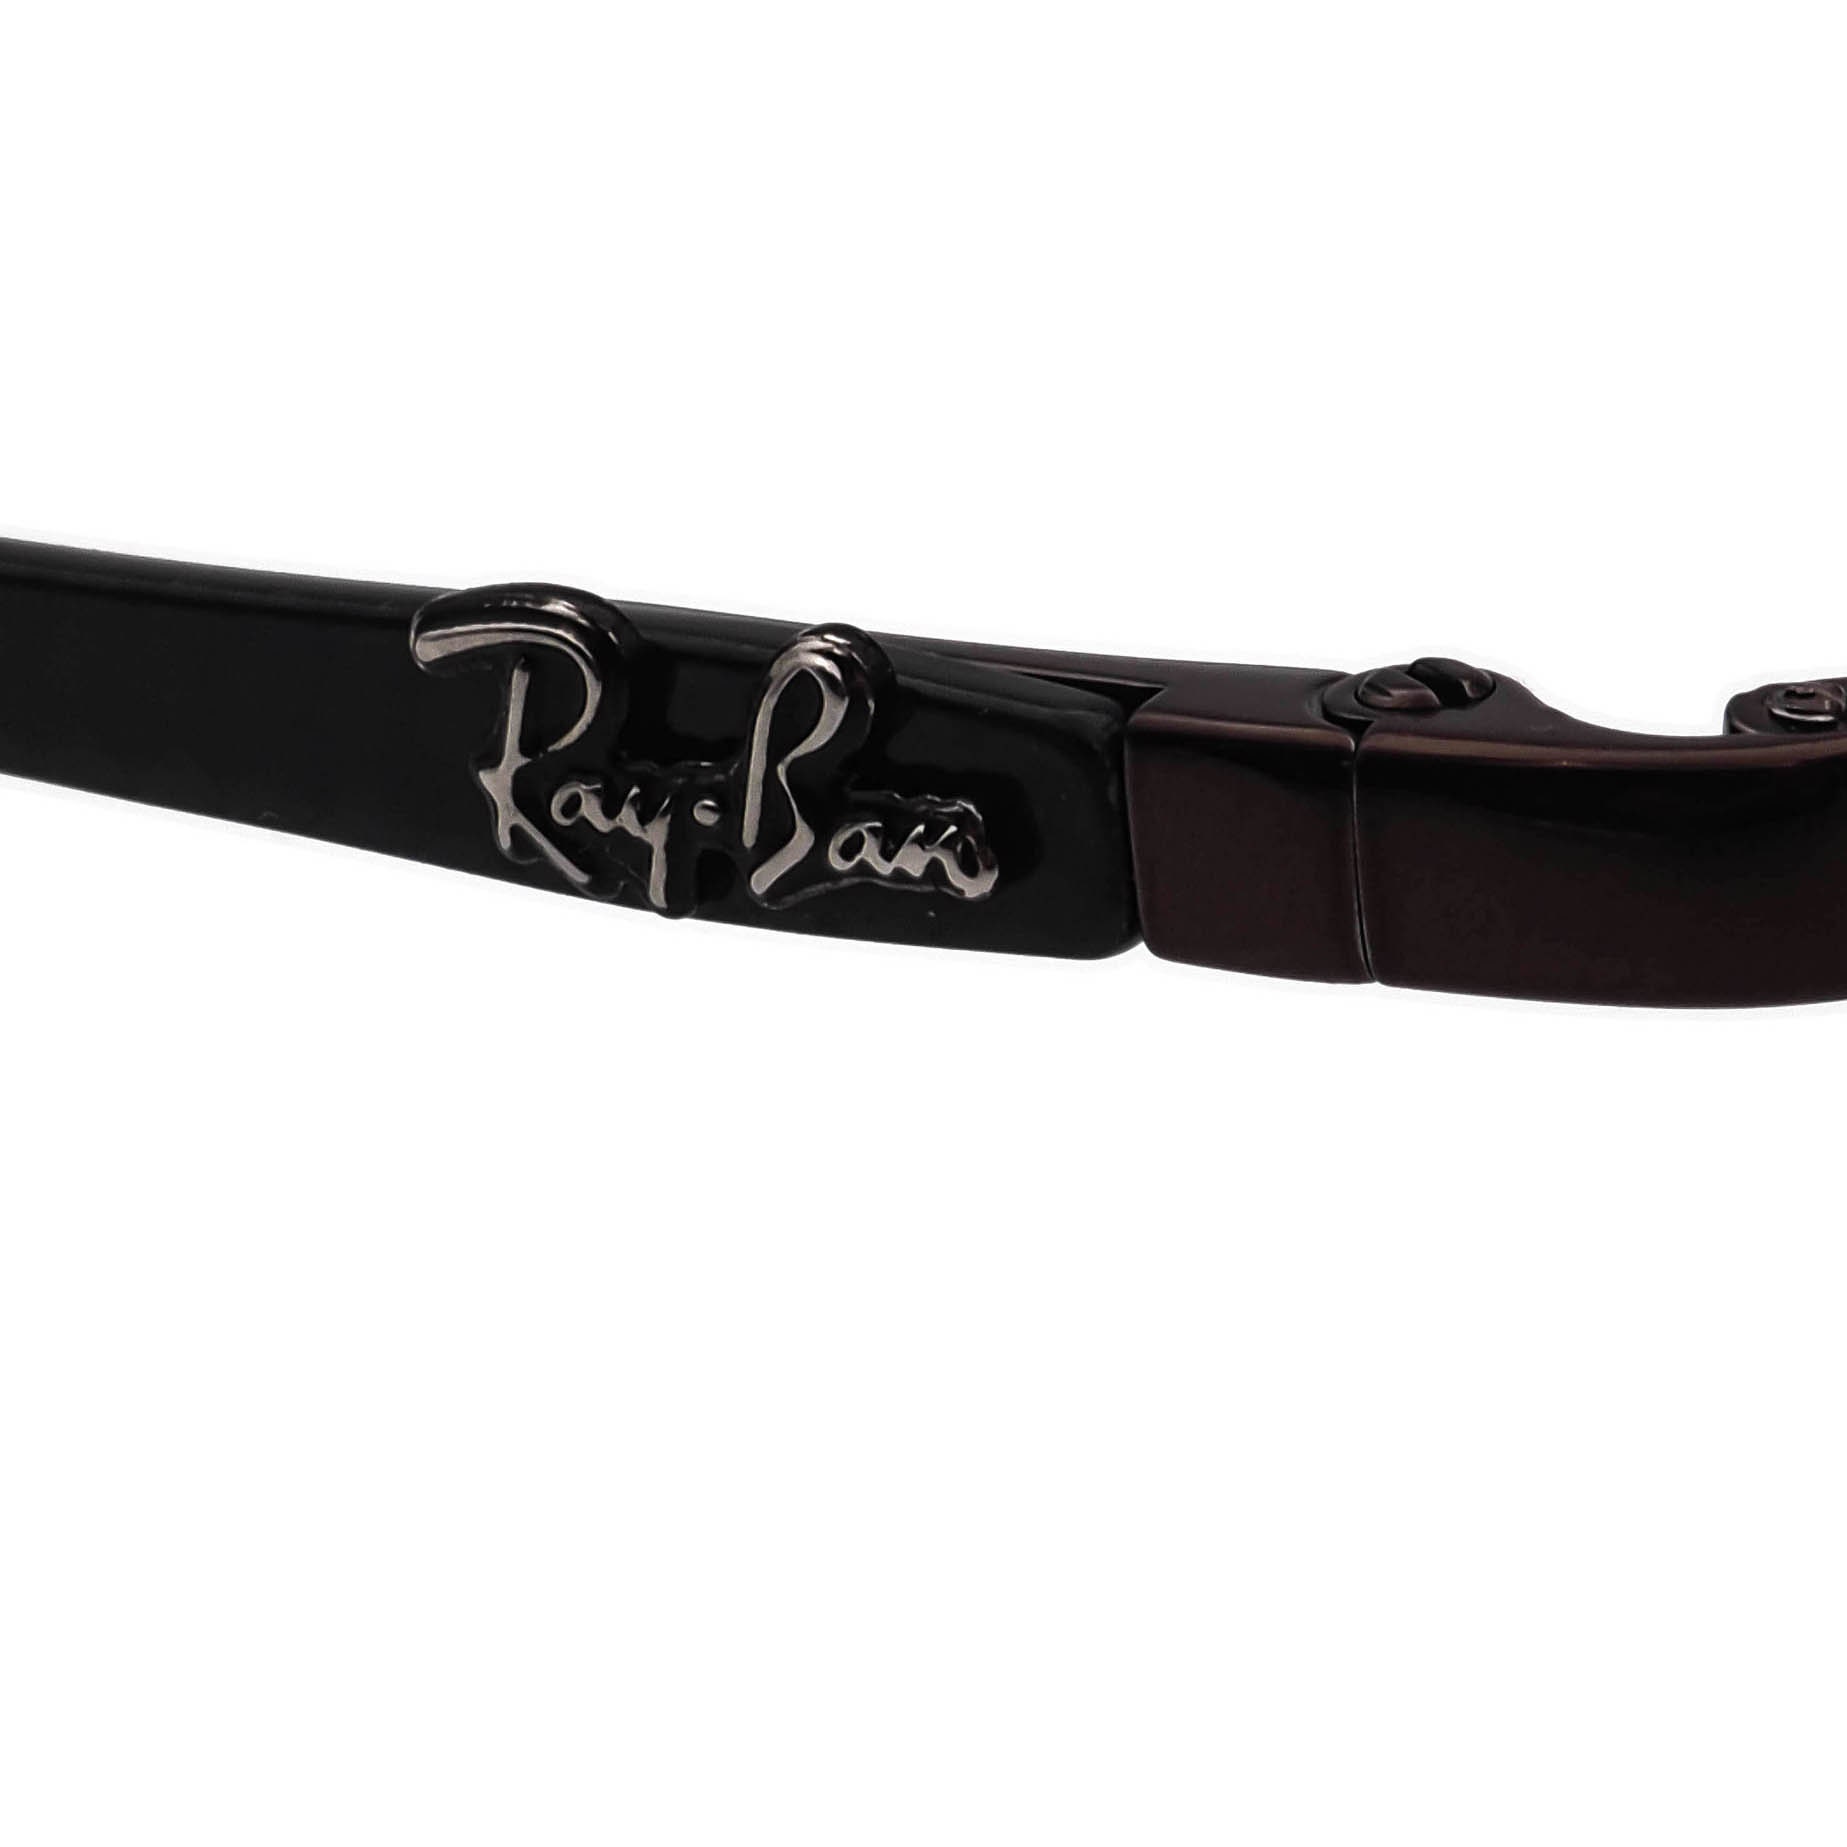 WAYFARER FOLDING CLASSIC Sunglasses in Black and Green - RB4105 | Ray-Ban®  US